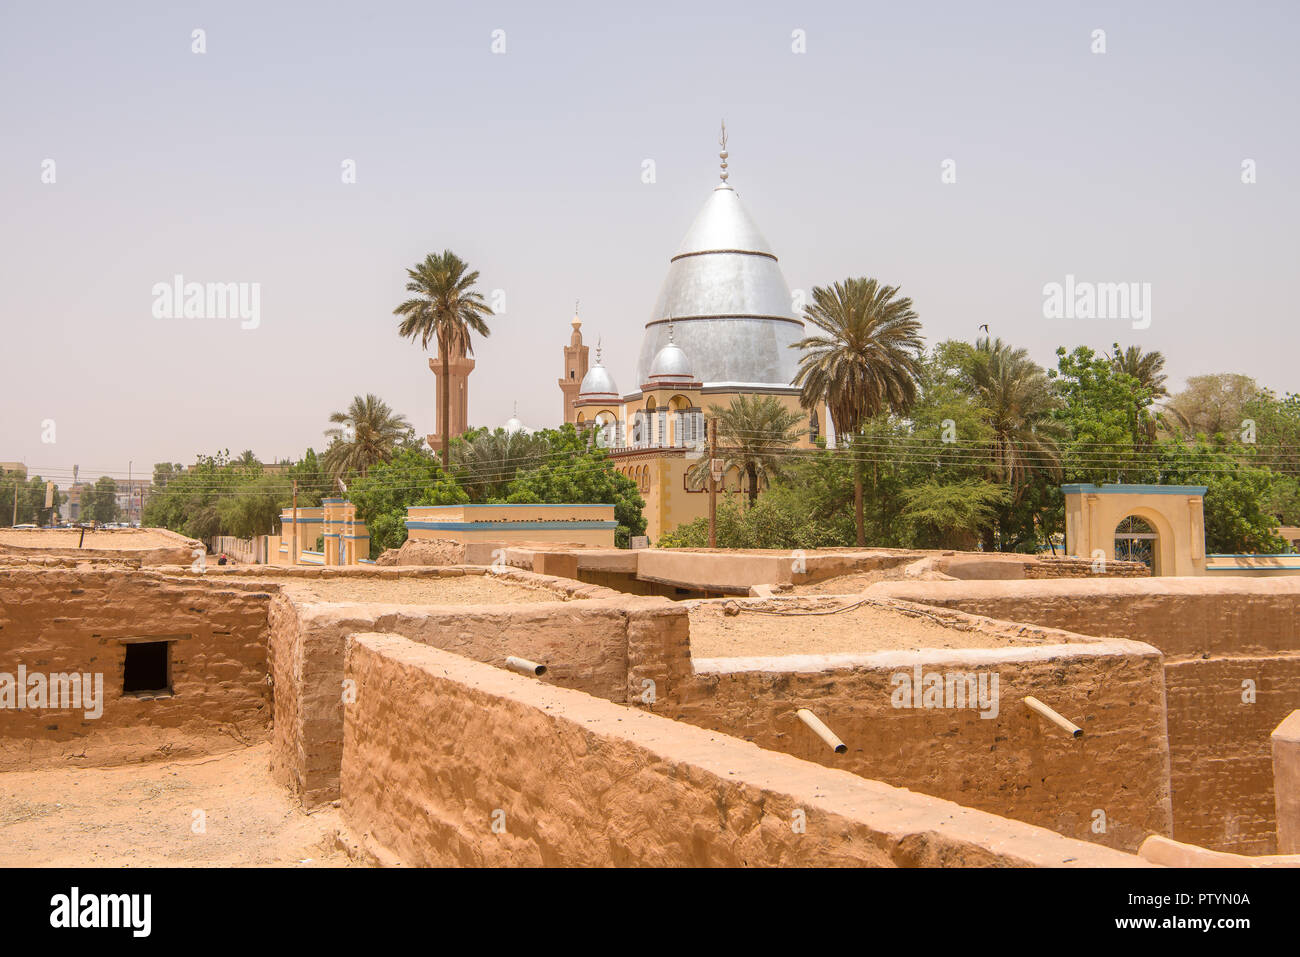 Sudan Khartoum old town city ancient village in capital city of Sudan Khartoum near Omdurman. Stock Photo